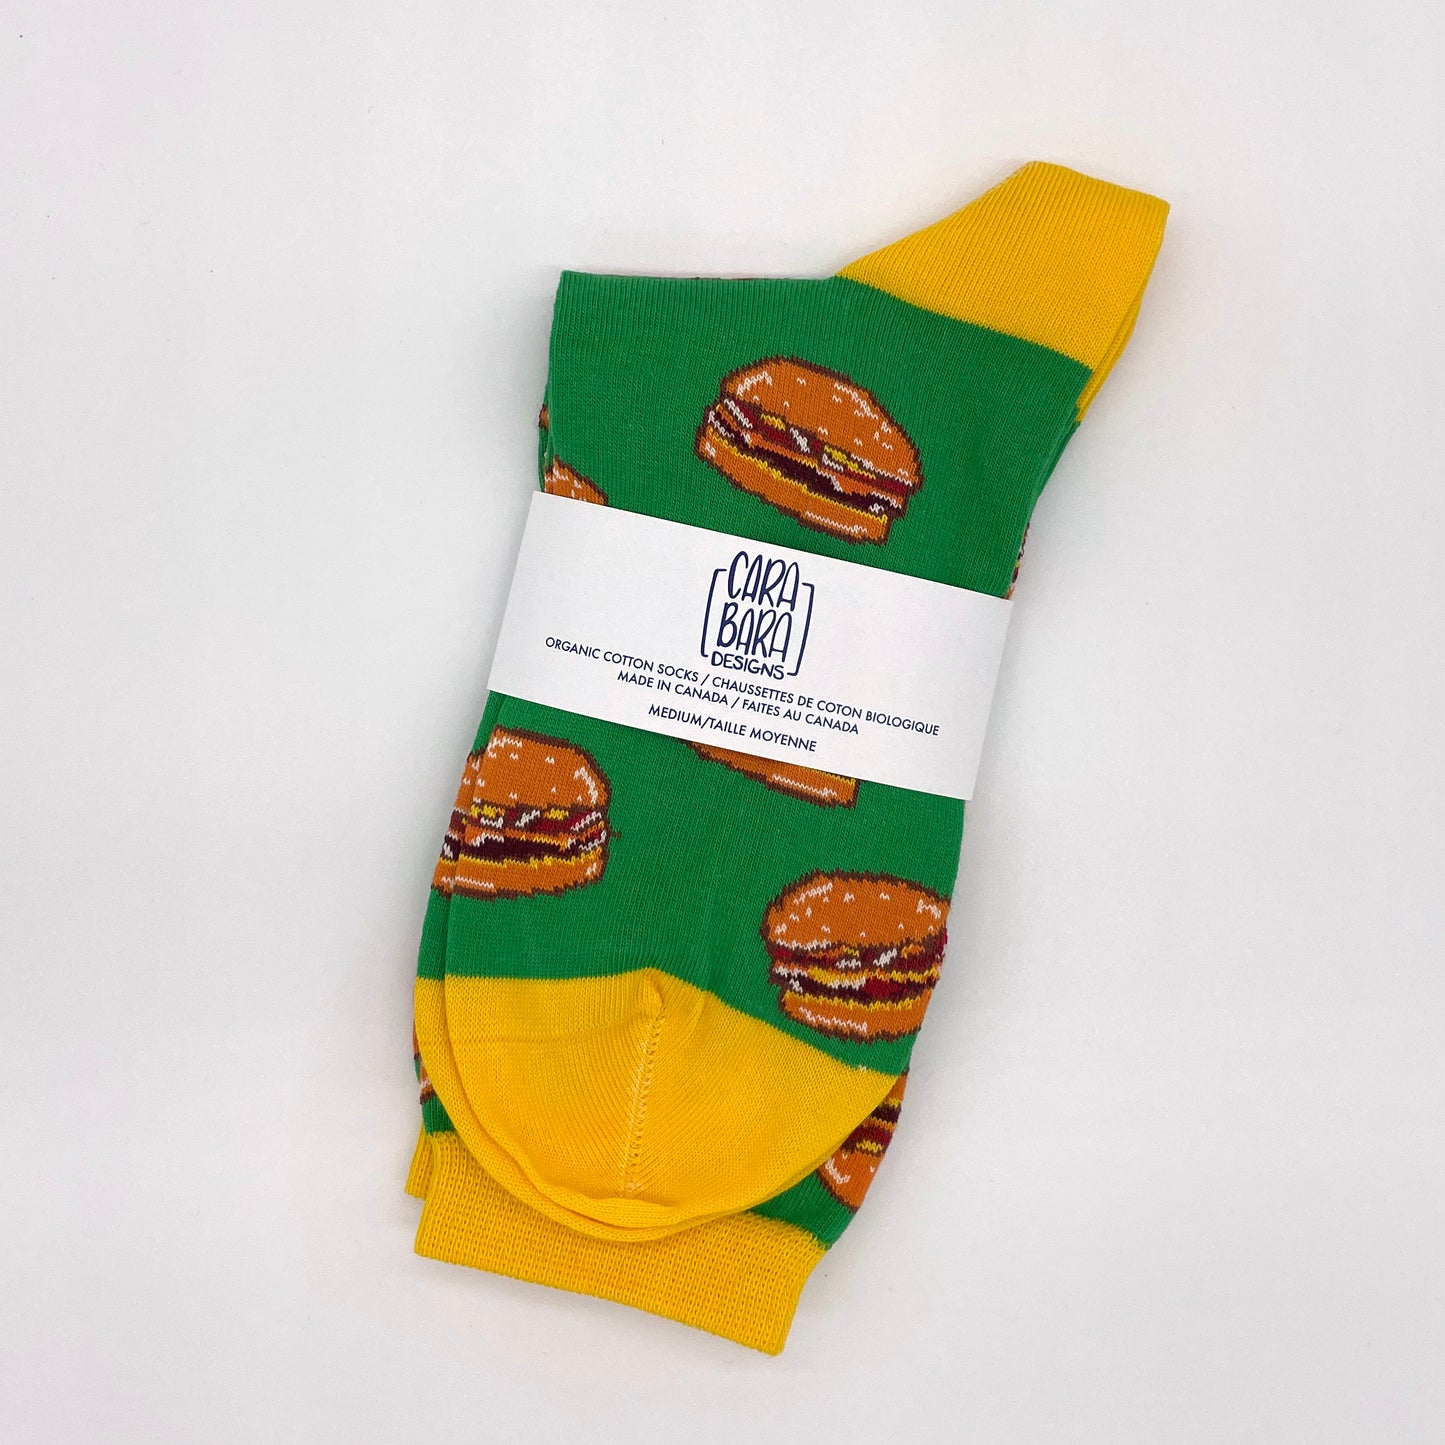 Green Cheeseburger Socks